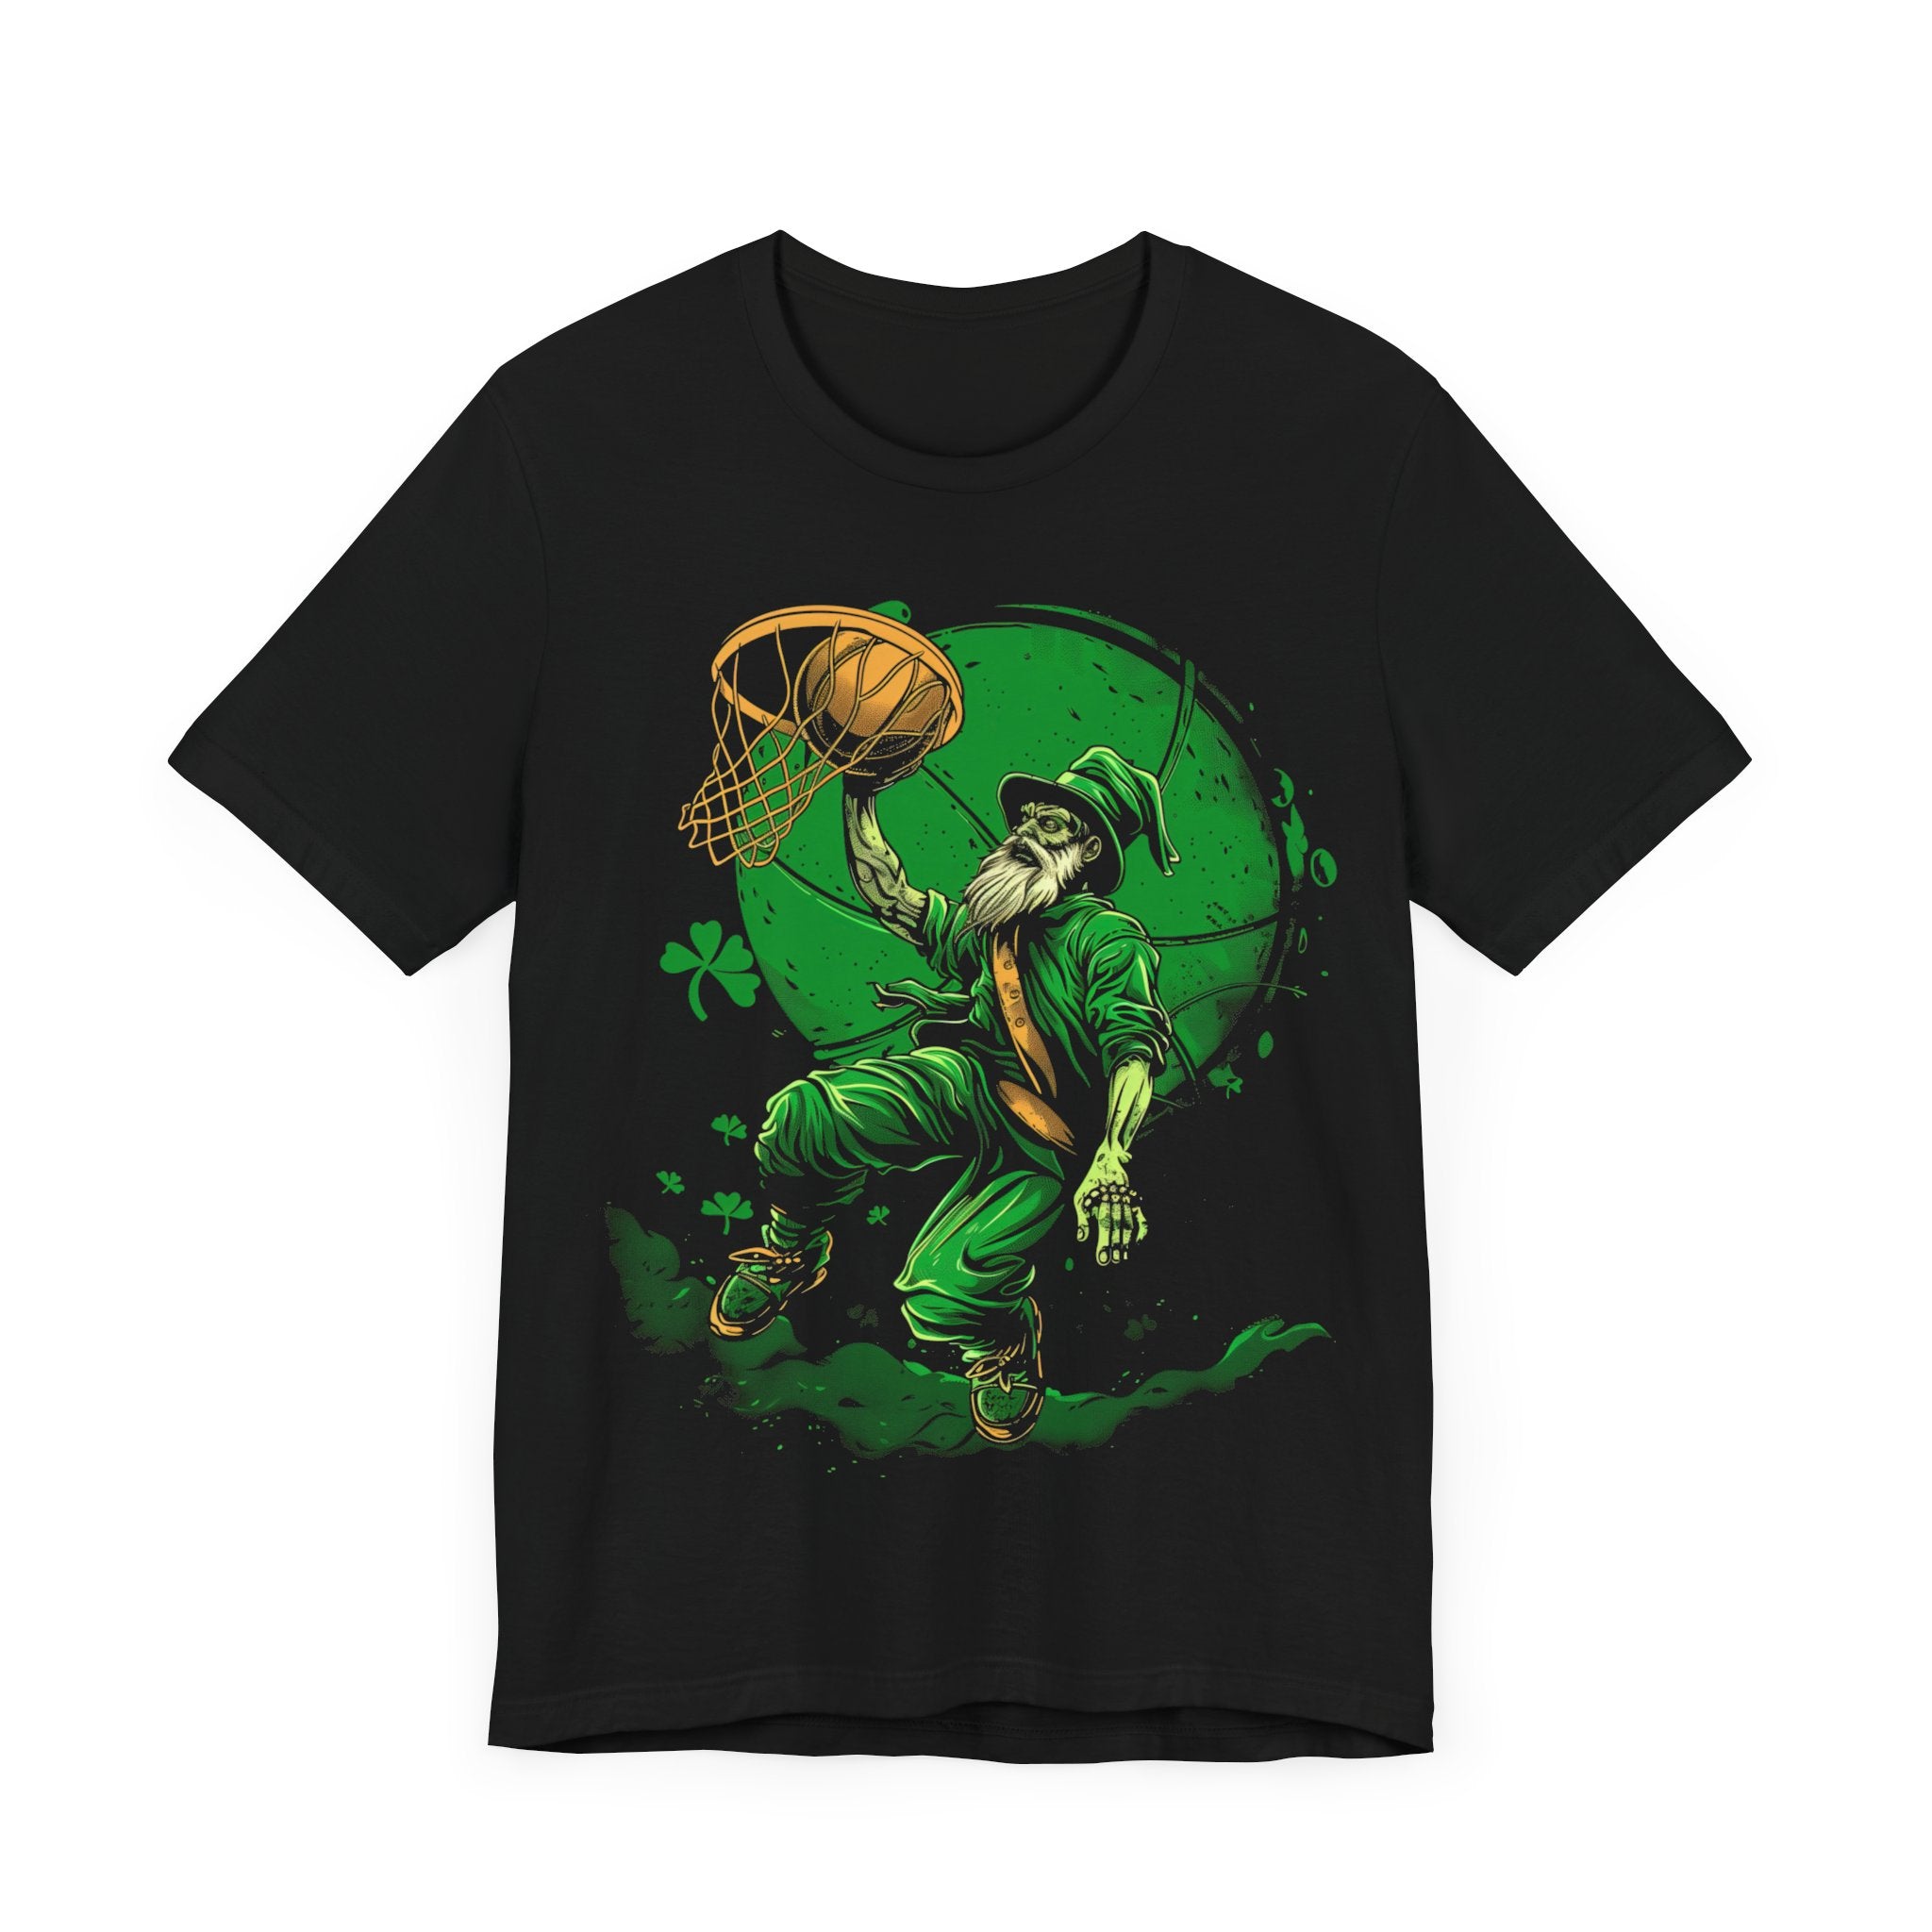 Green FN Irish Edition Slam Dunk T-Shirt: Viral Meme-Inspired Sports Tee with Perfect Shot Graphic & Eye-Catching Splash Design